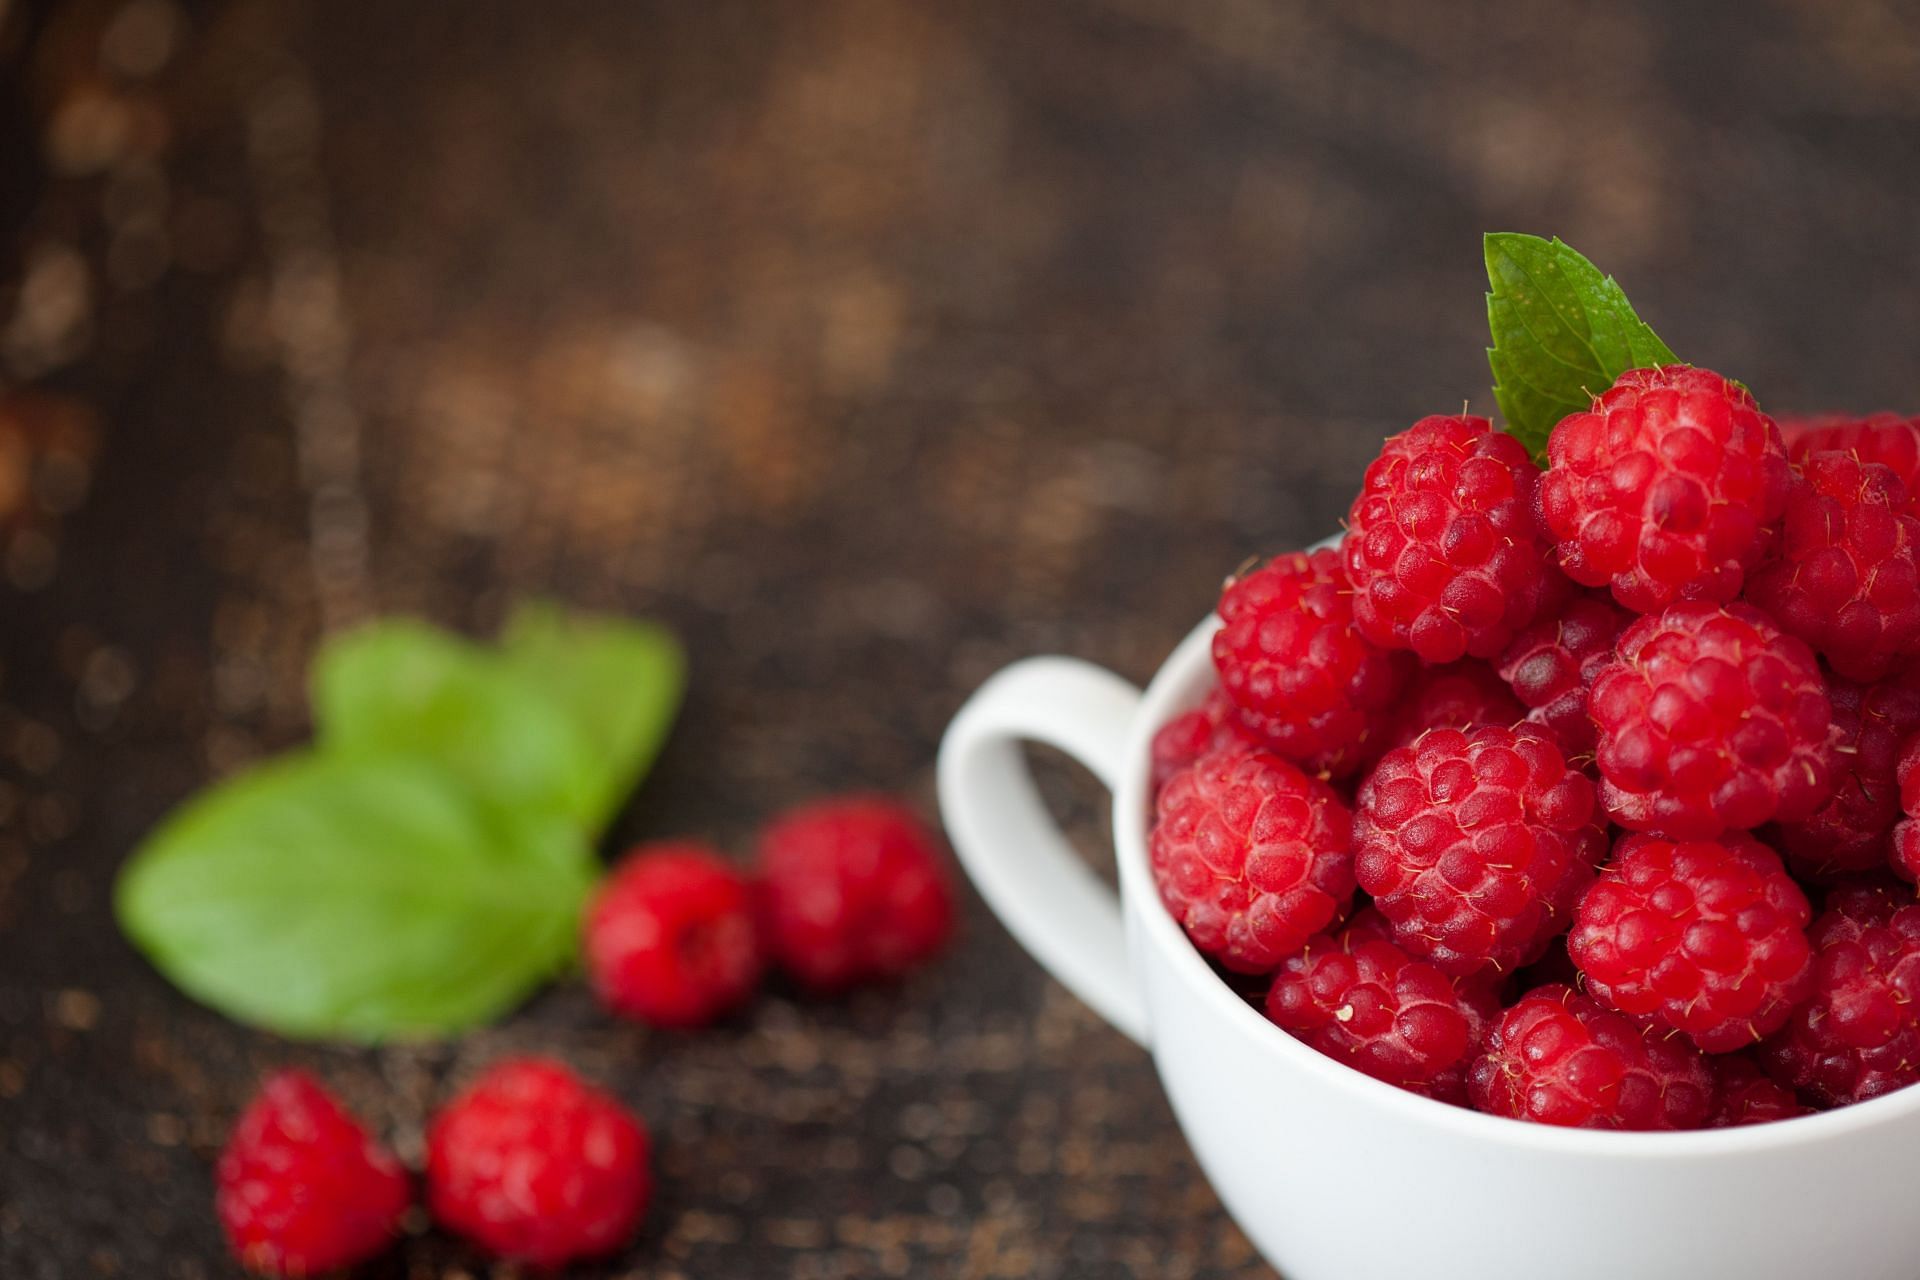 There are fewer calories in raspberries. (Image via Pexels/ Robert Bogdan)